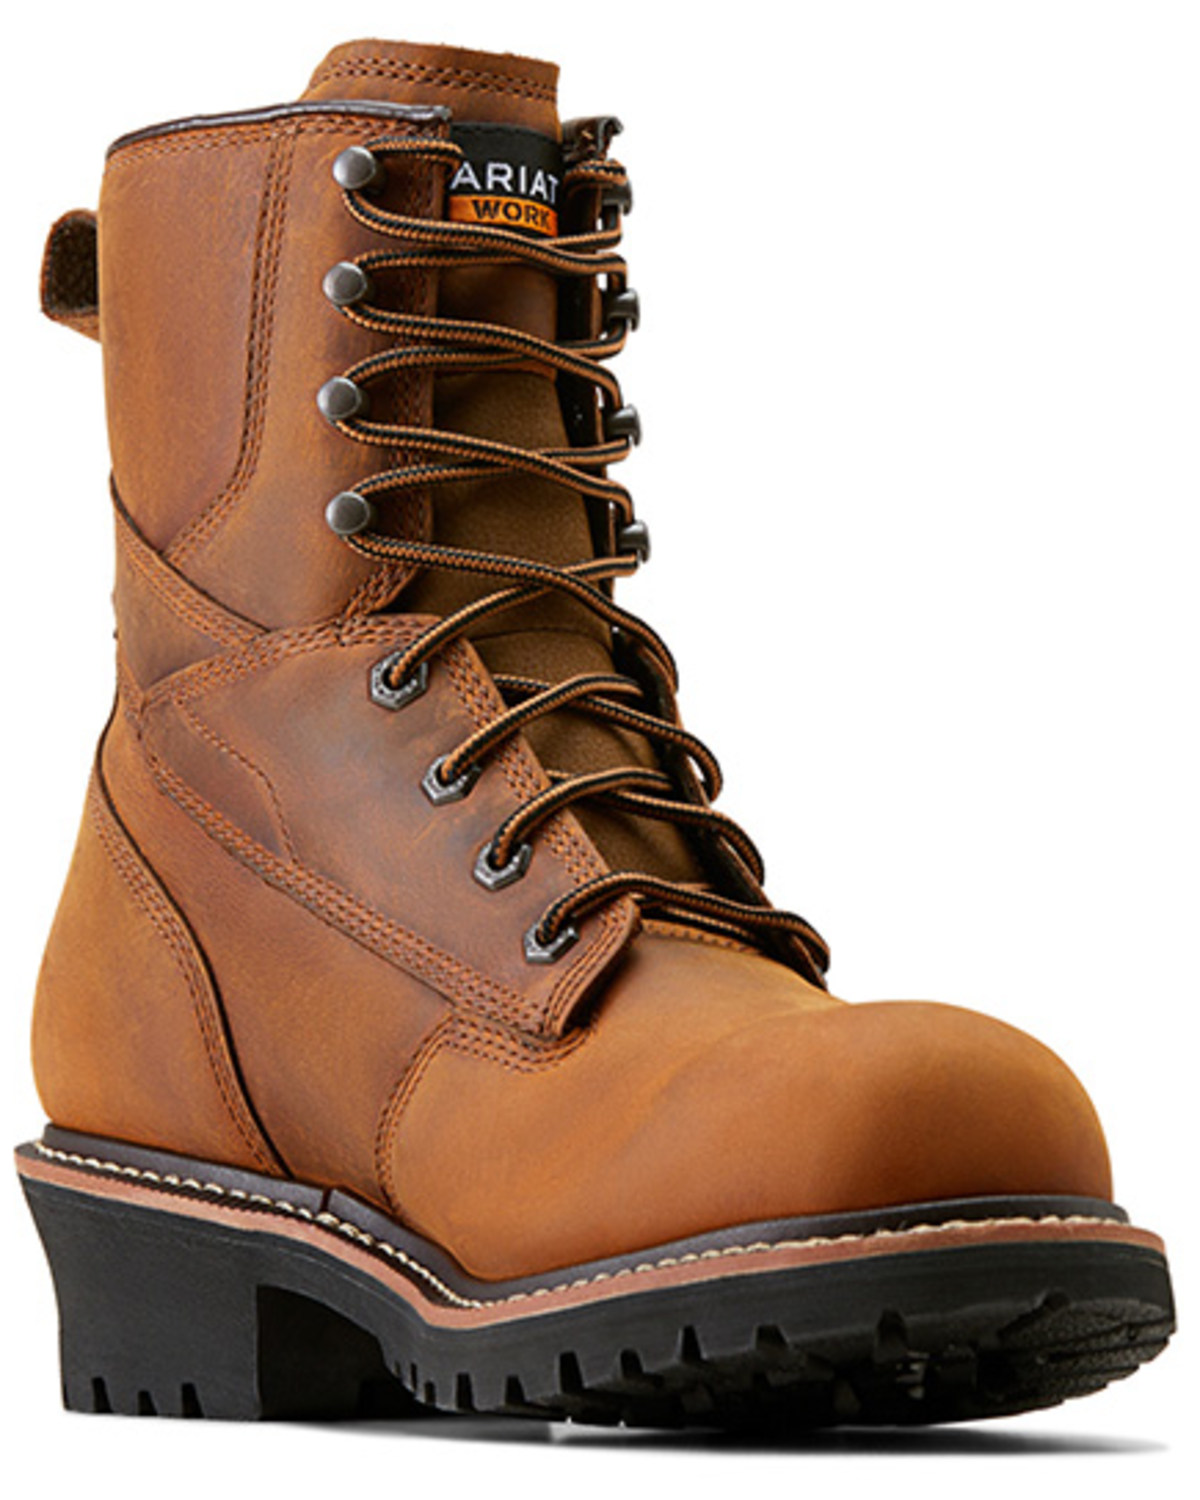 Ariat Men's 8" Logger Shock Shield Waterproof Work Boots - Soft Toe